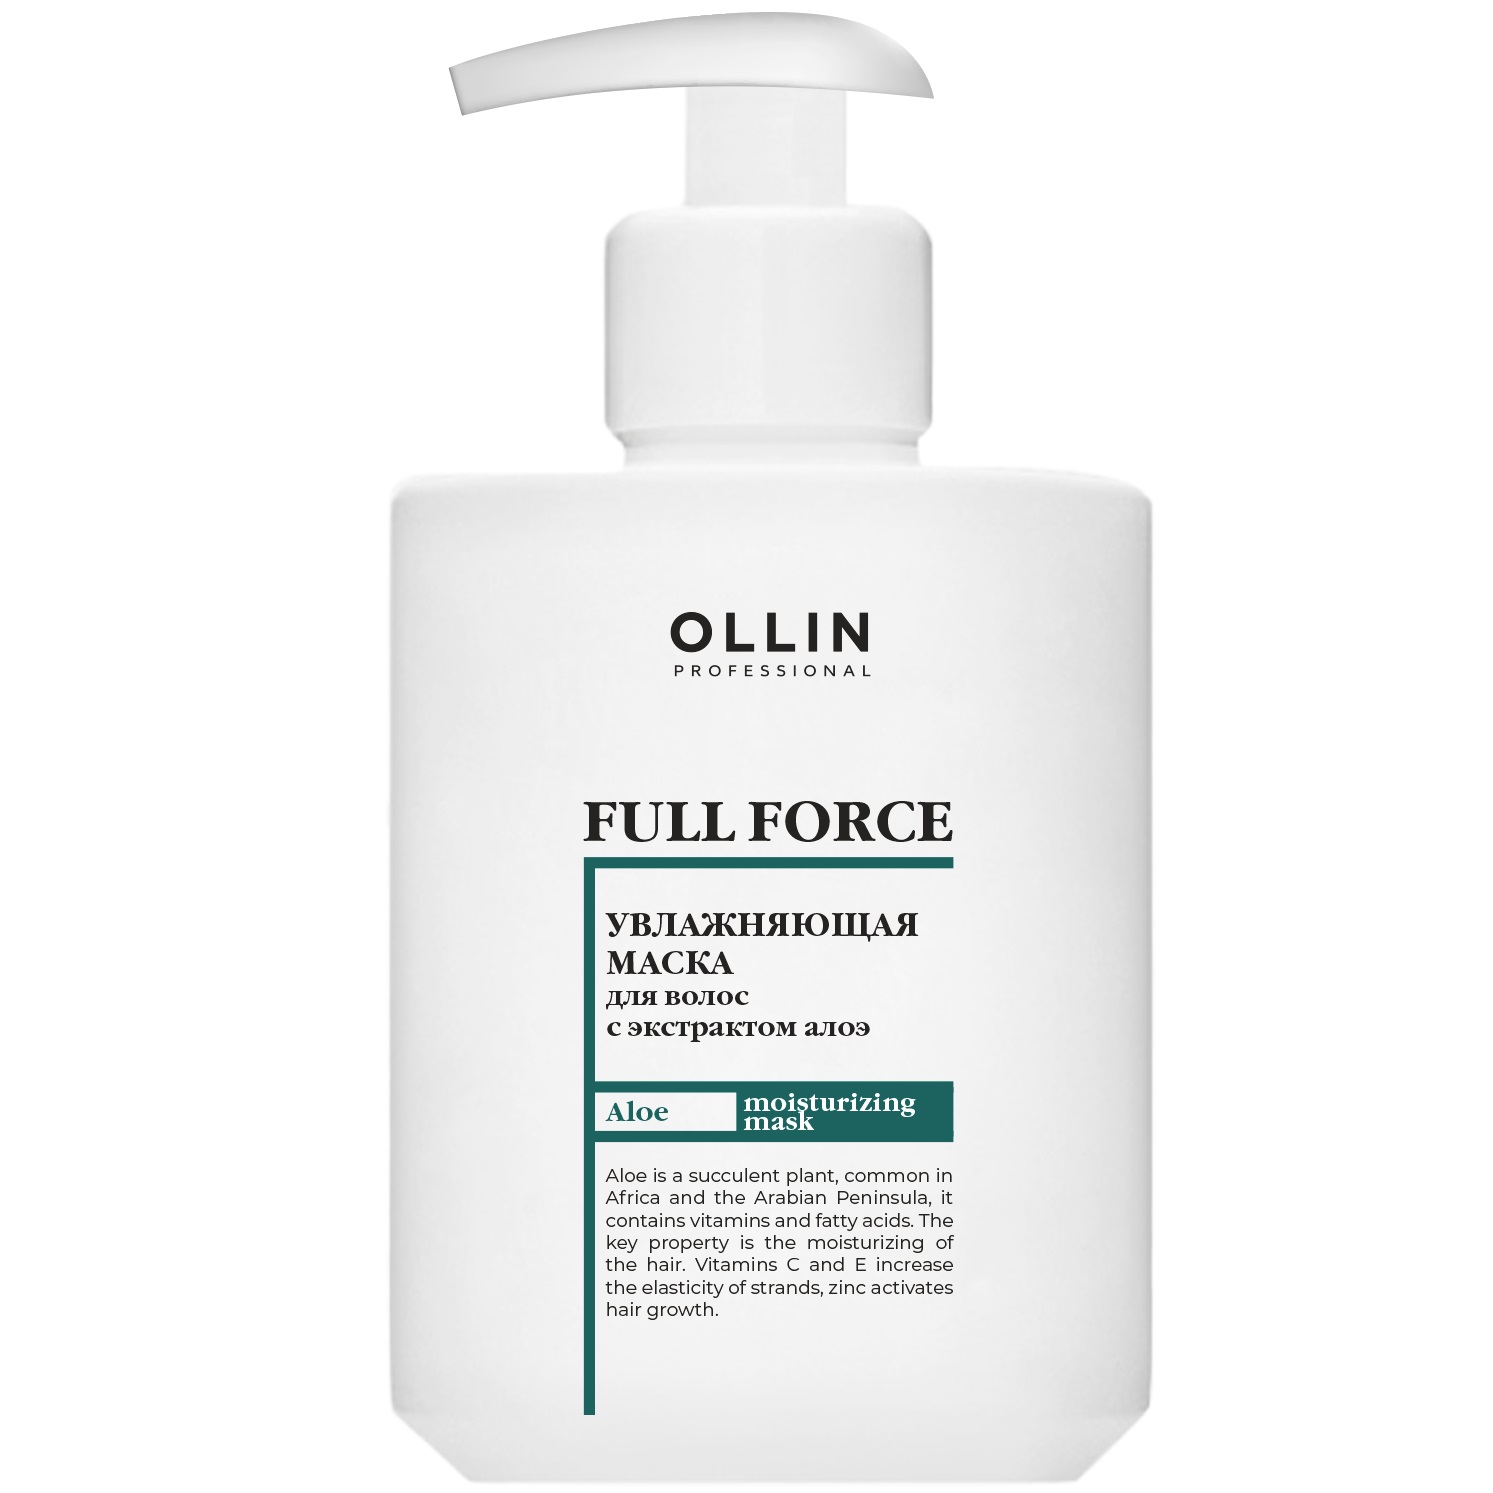 Ollin Professional Увлажняющая маска с экстрактом алоэ для волос, 300 мл (Ollin Professional, Full Force)